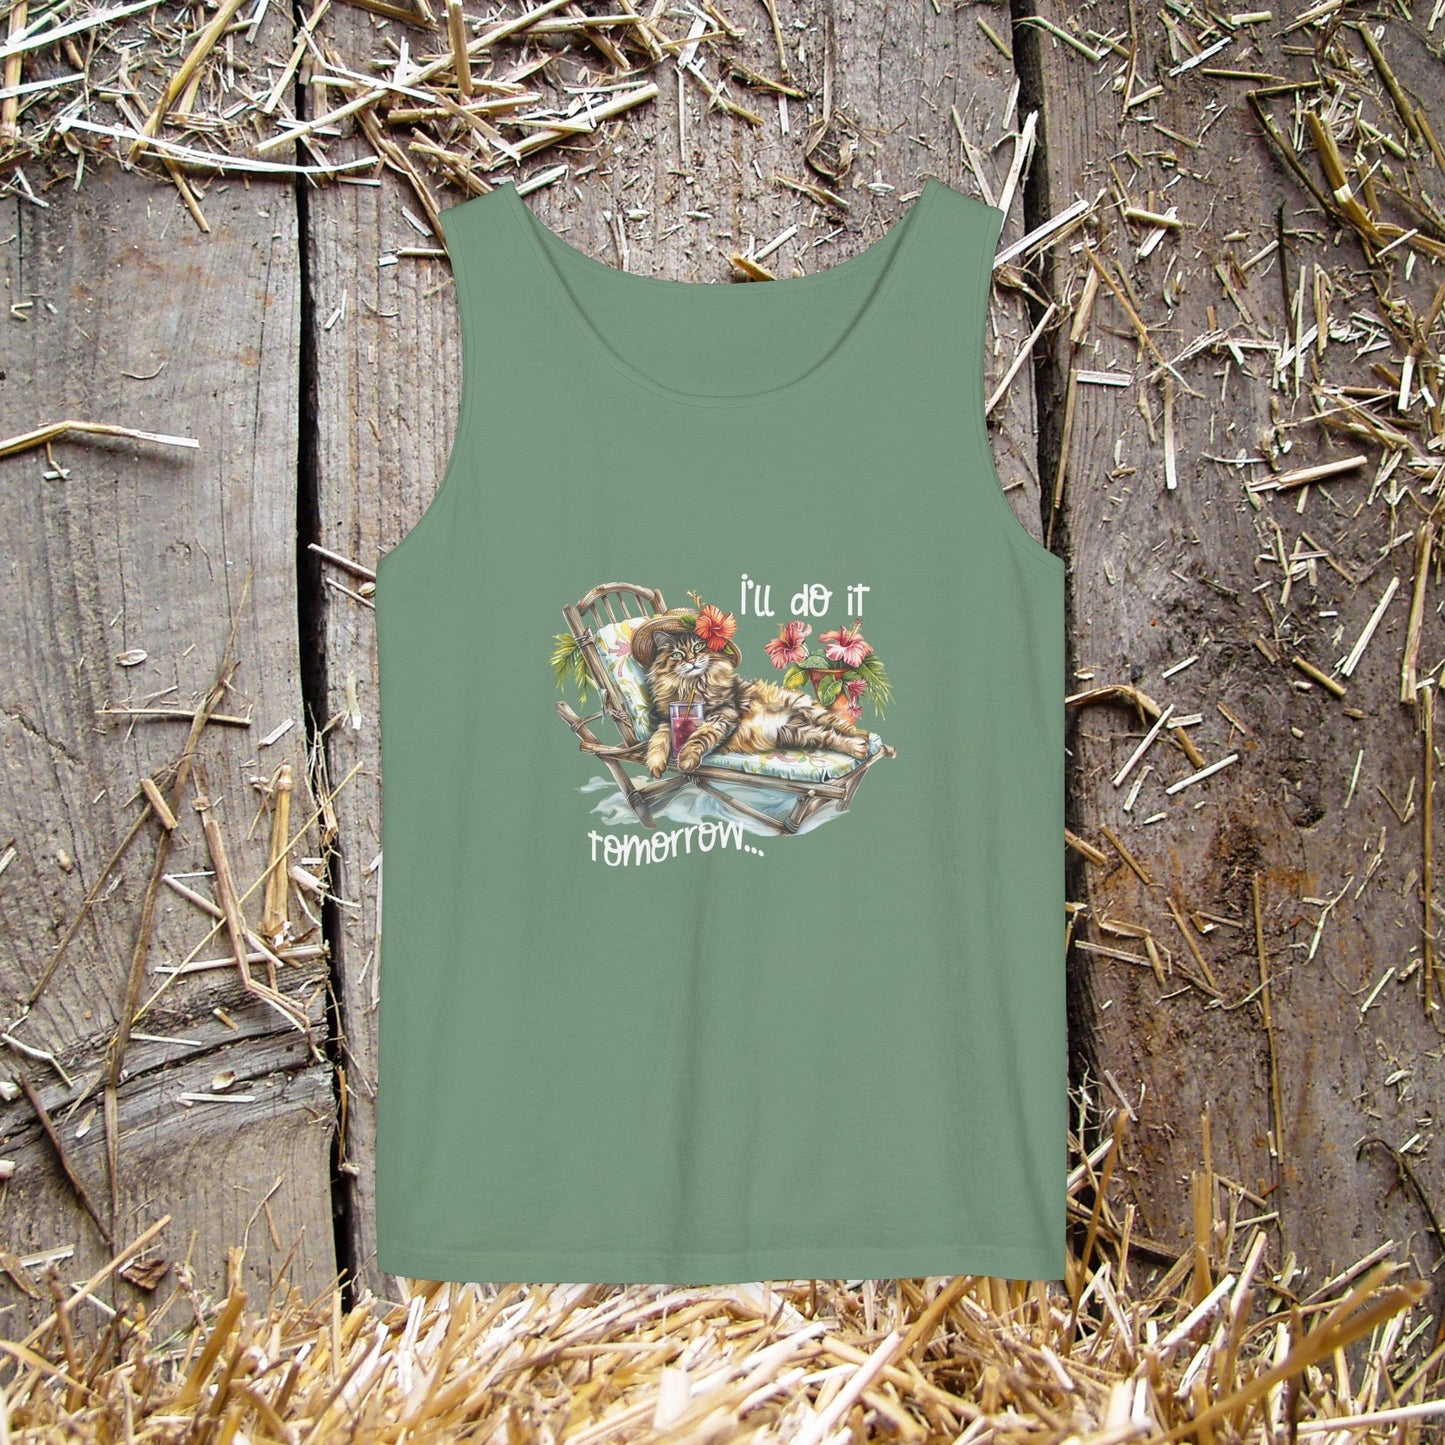 Funny Cat Tank Top, "I'll Do it Tomorrow", Cat Lover Shirt, Whimsical Cat Tank - FlooredByArt